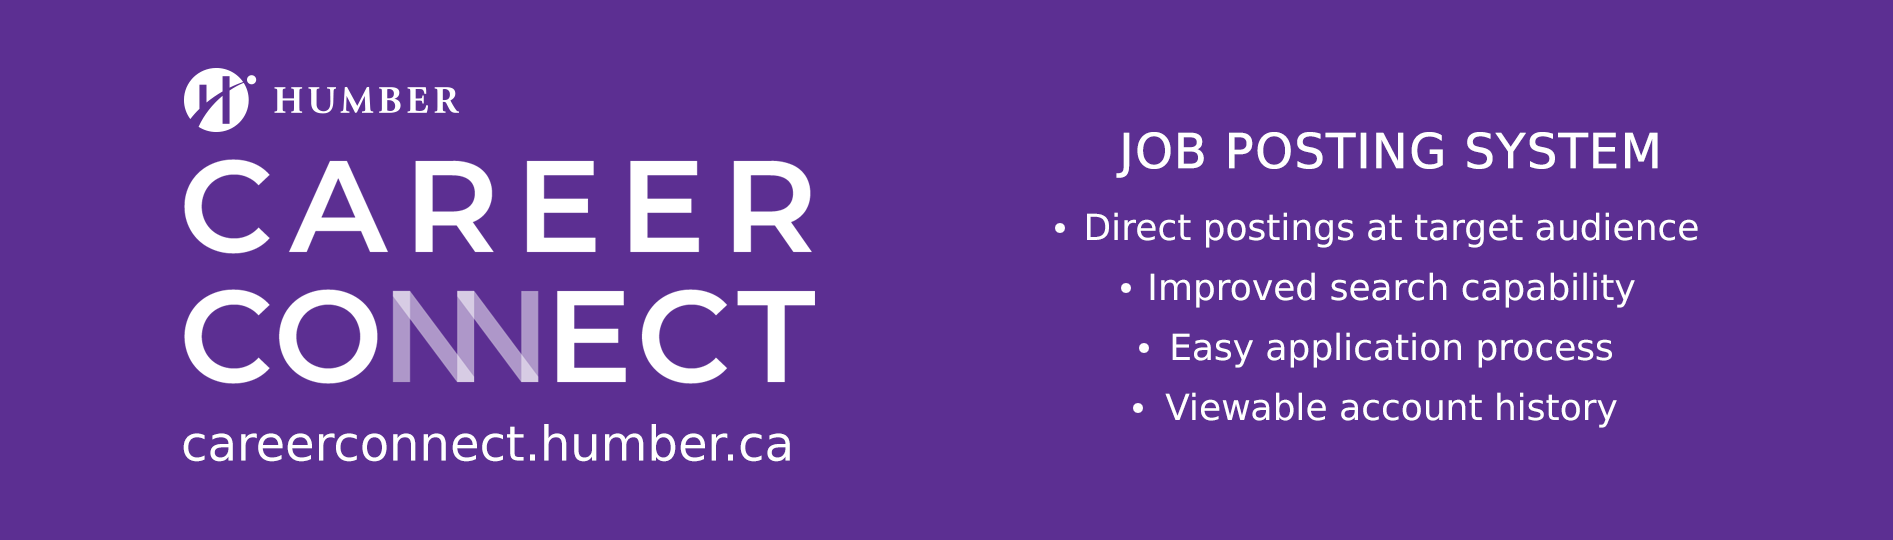 CareerConnect Job Posting System